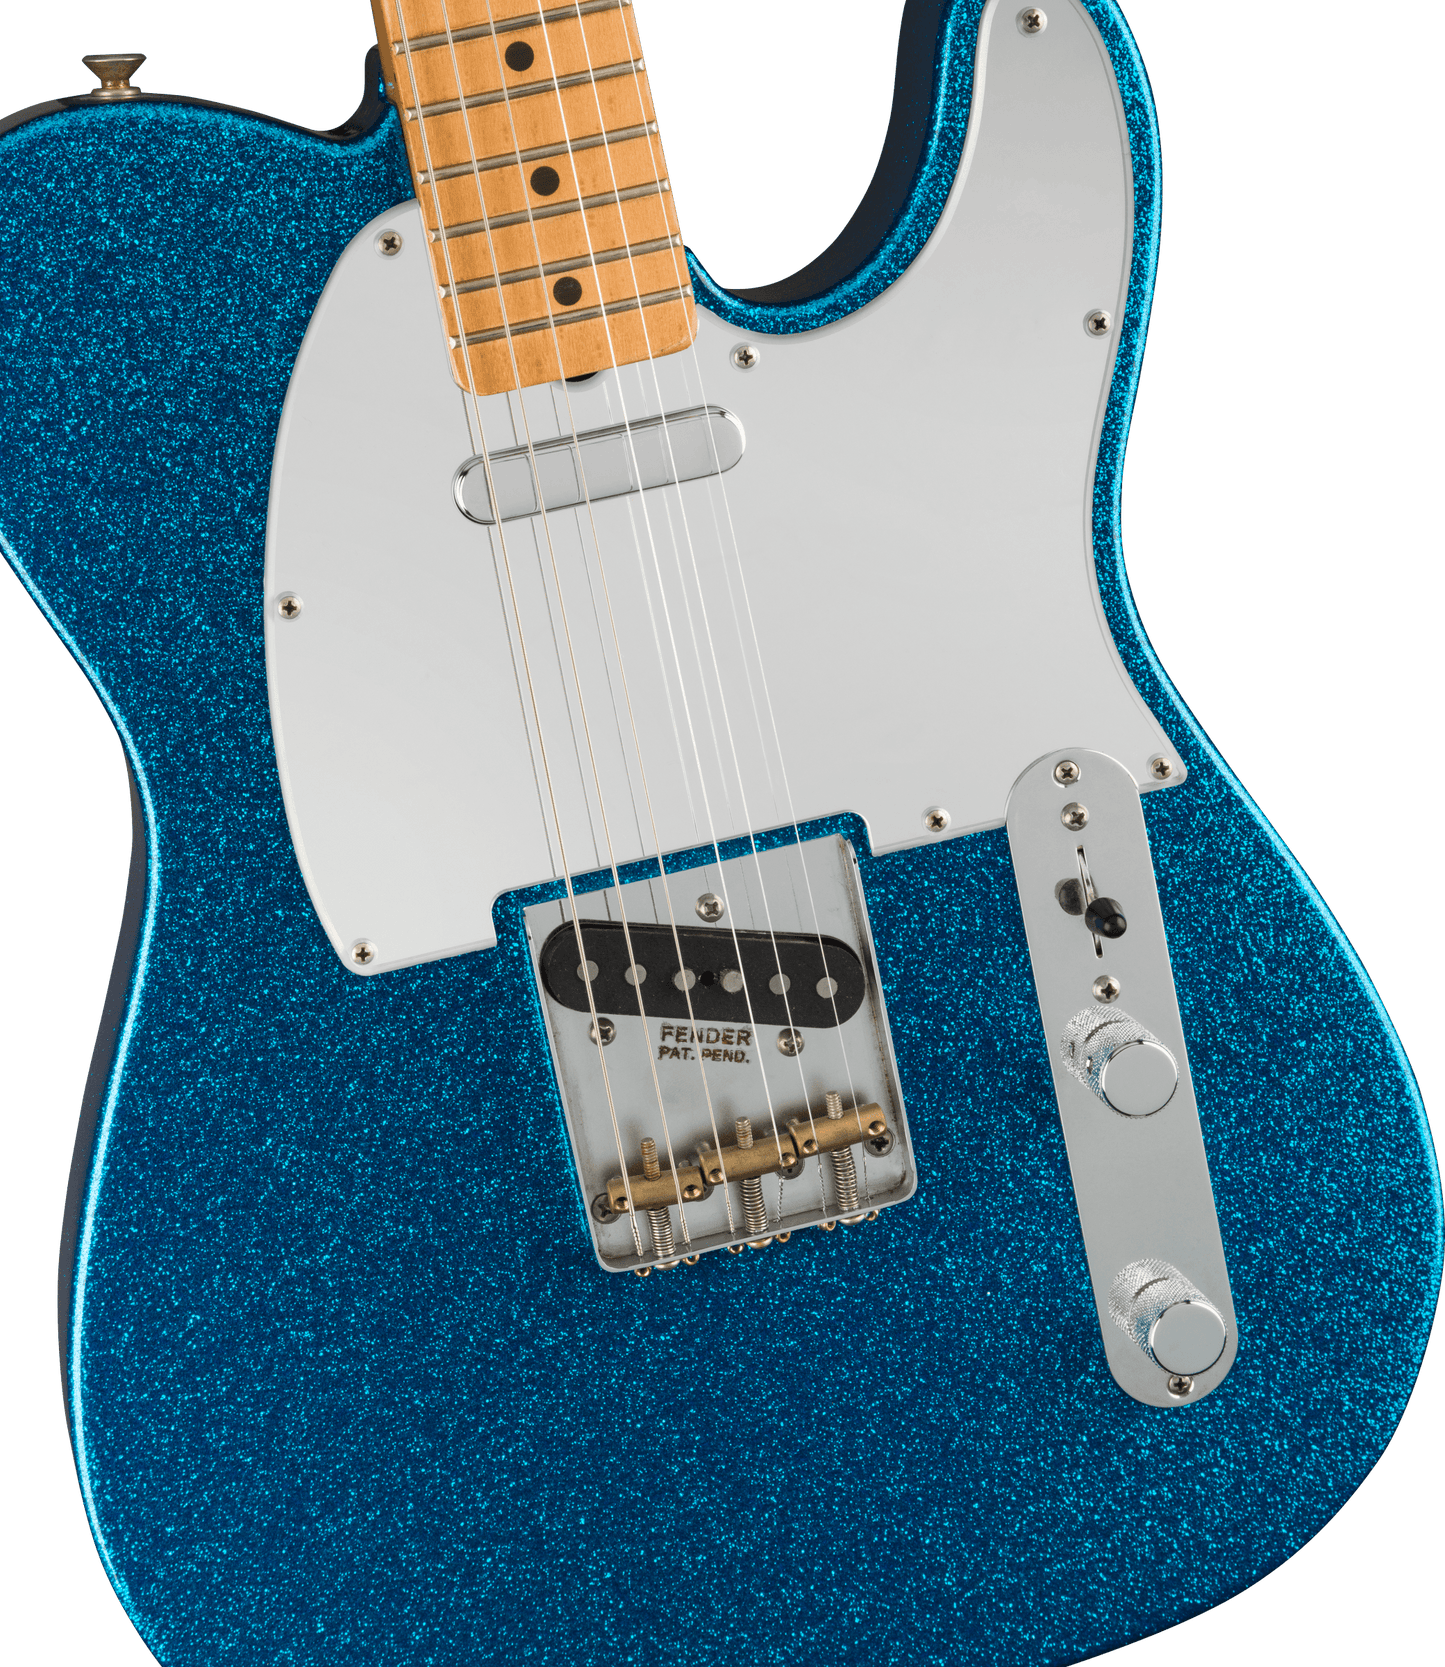 Fender J Mascis Telecaster - Bottle Rocket Blue Flake